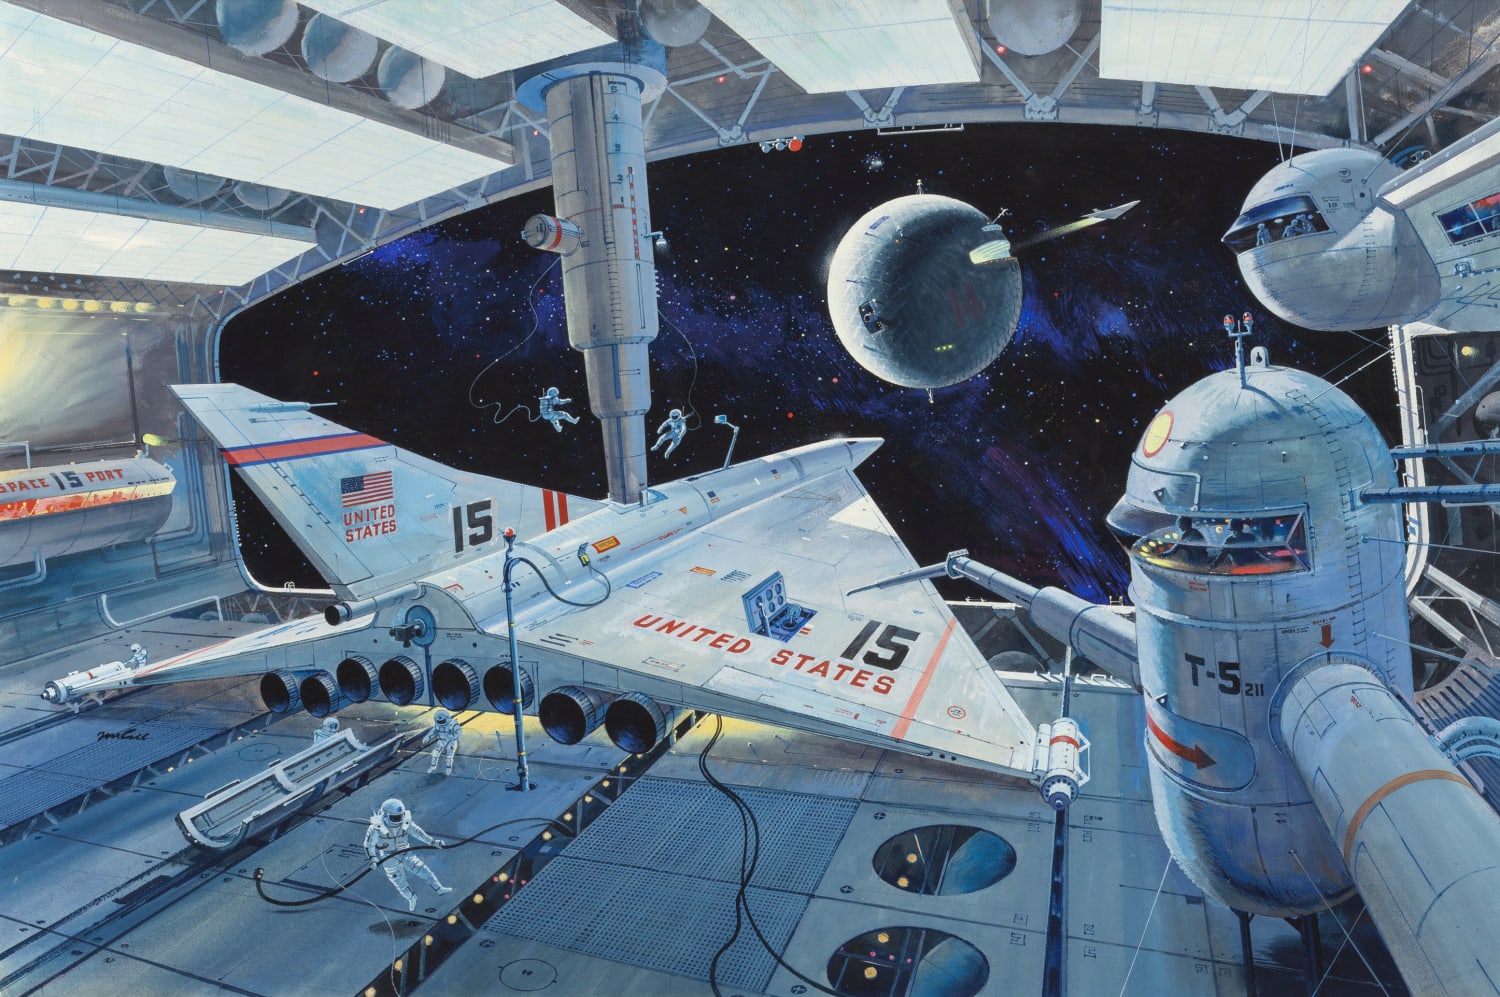 Robert McCall's America in Space